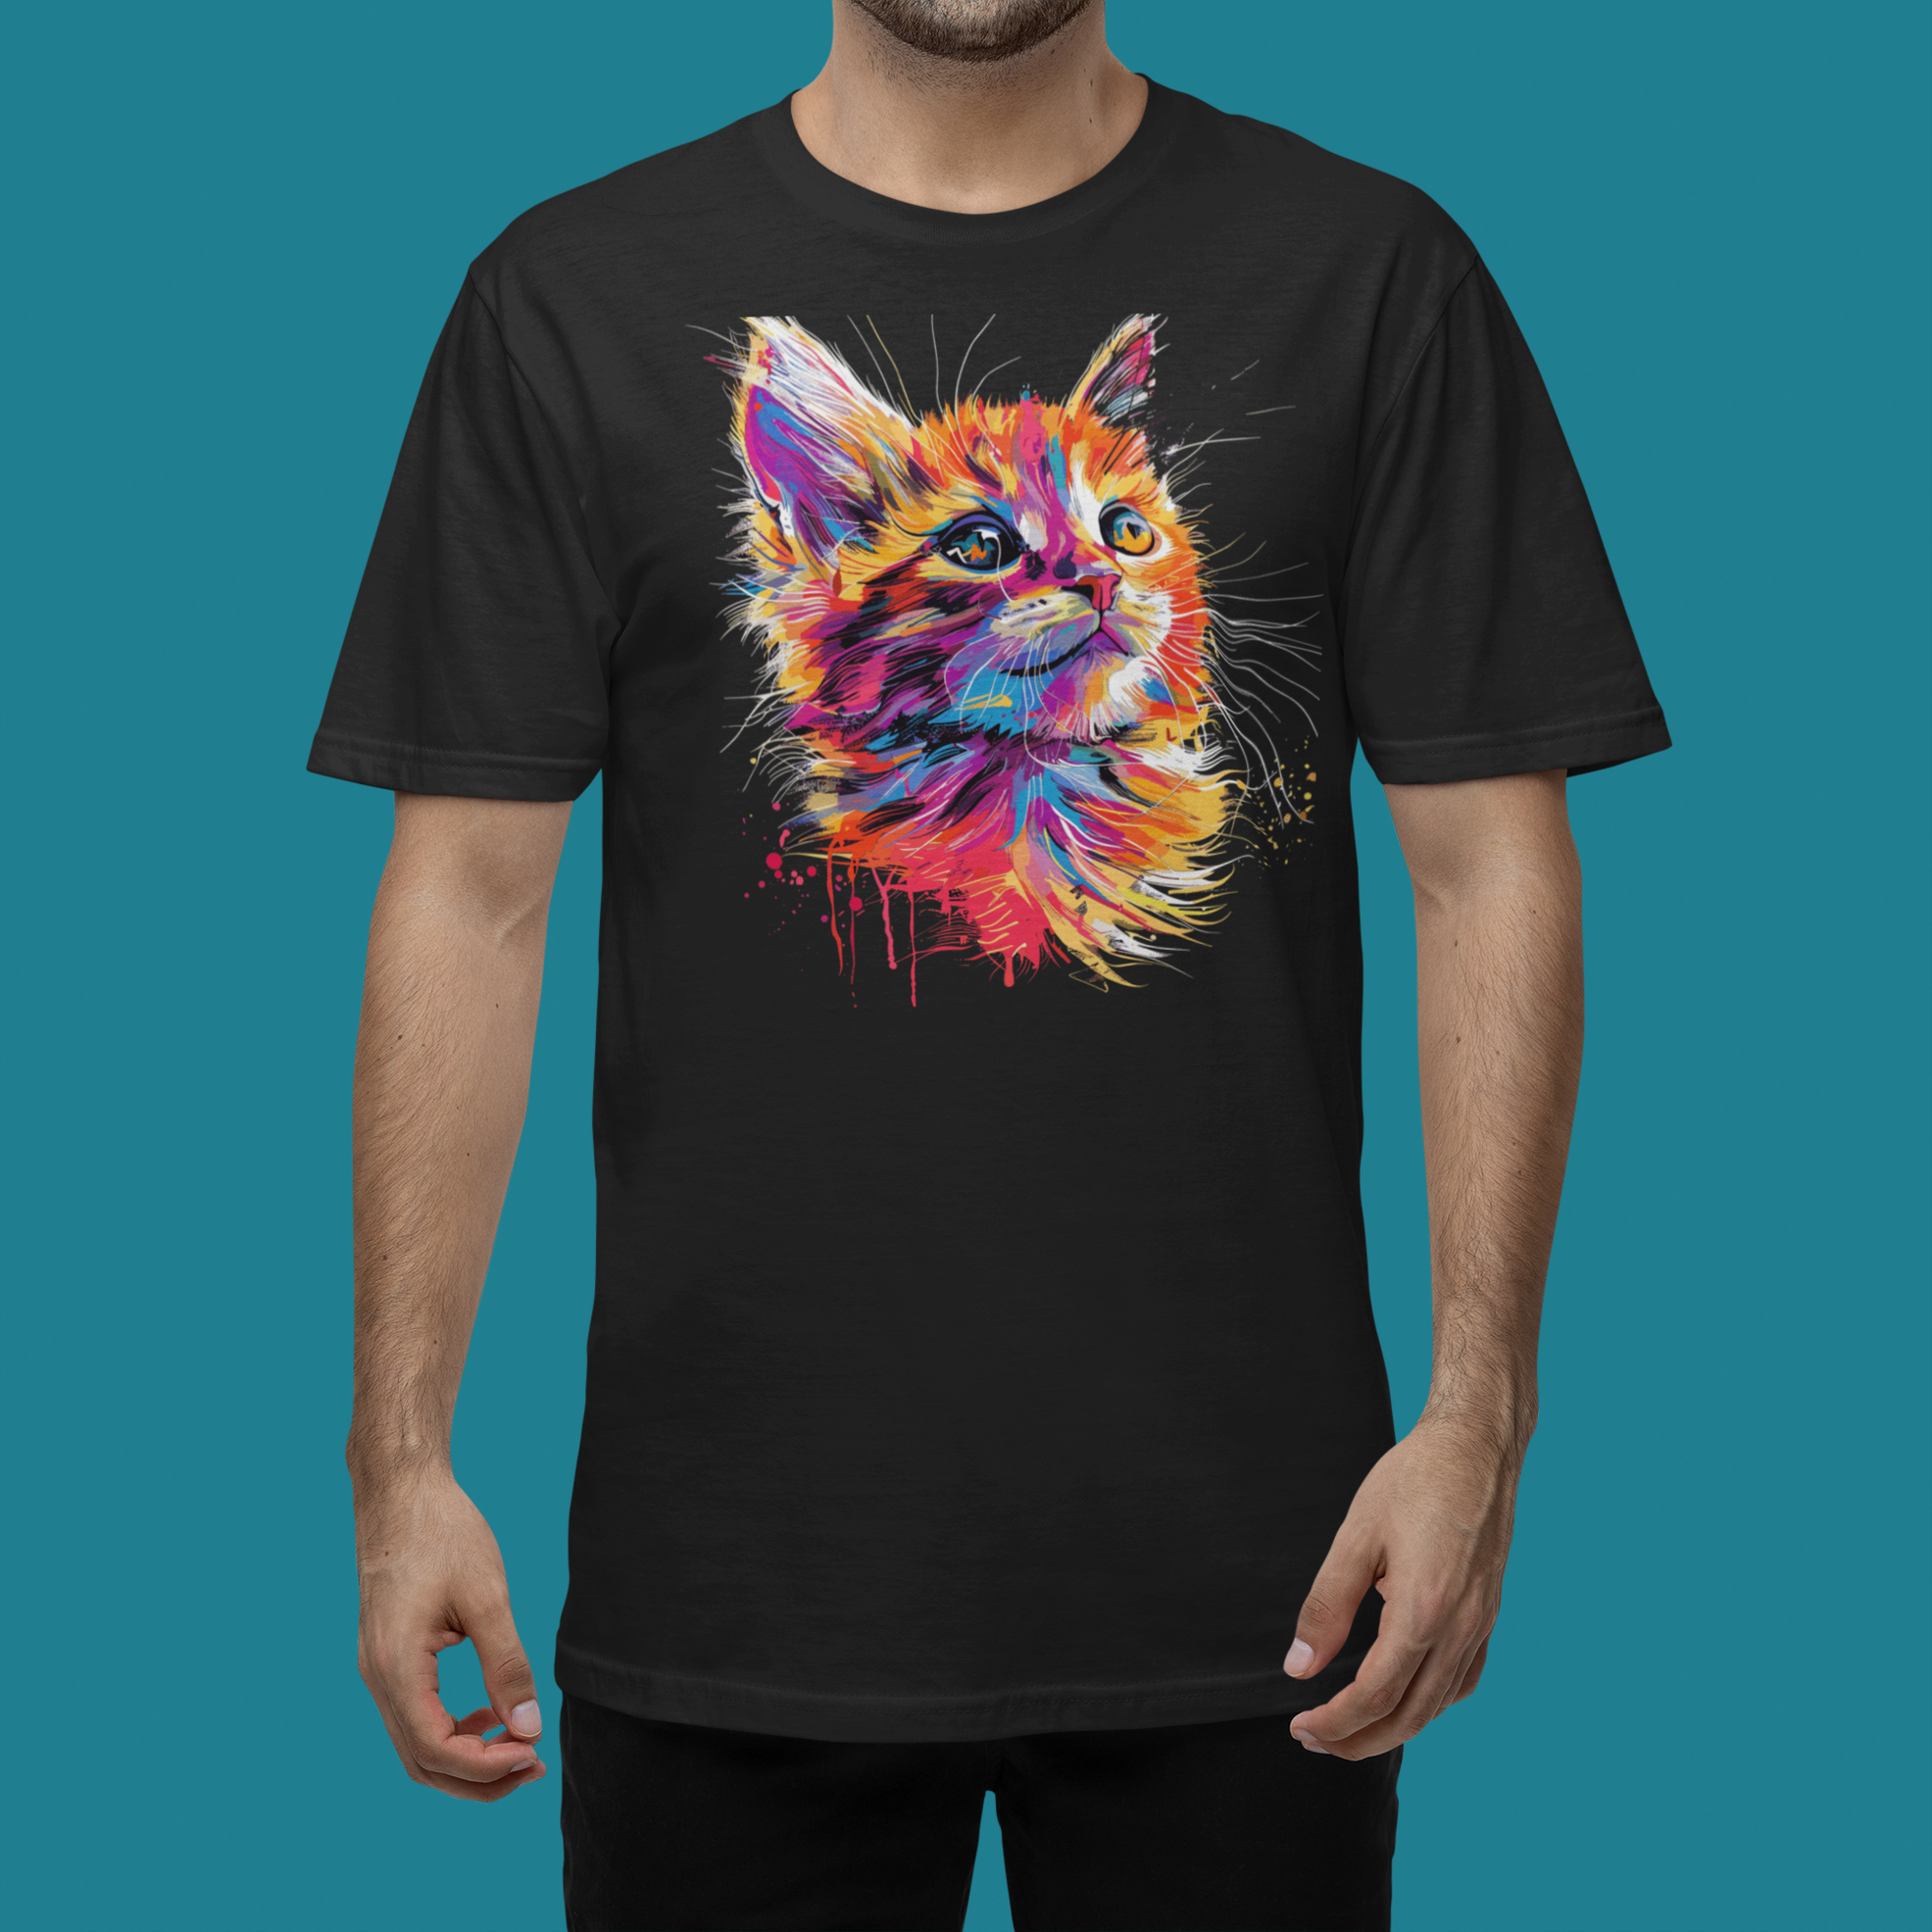 Adorable Cat Design Men's T-shirt for cat lovers| Storeily